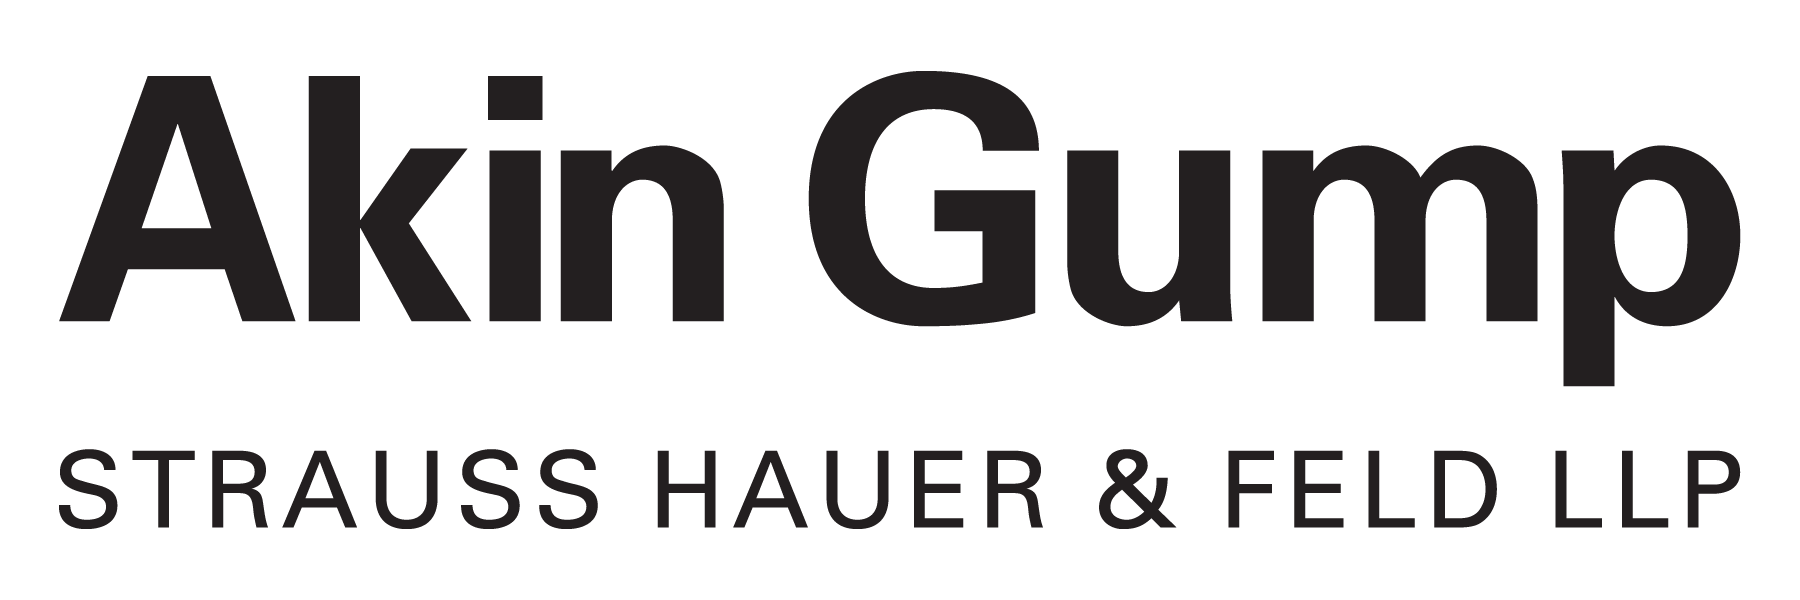 AG-logo-black-large